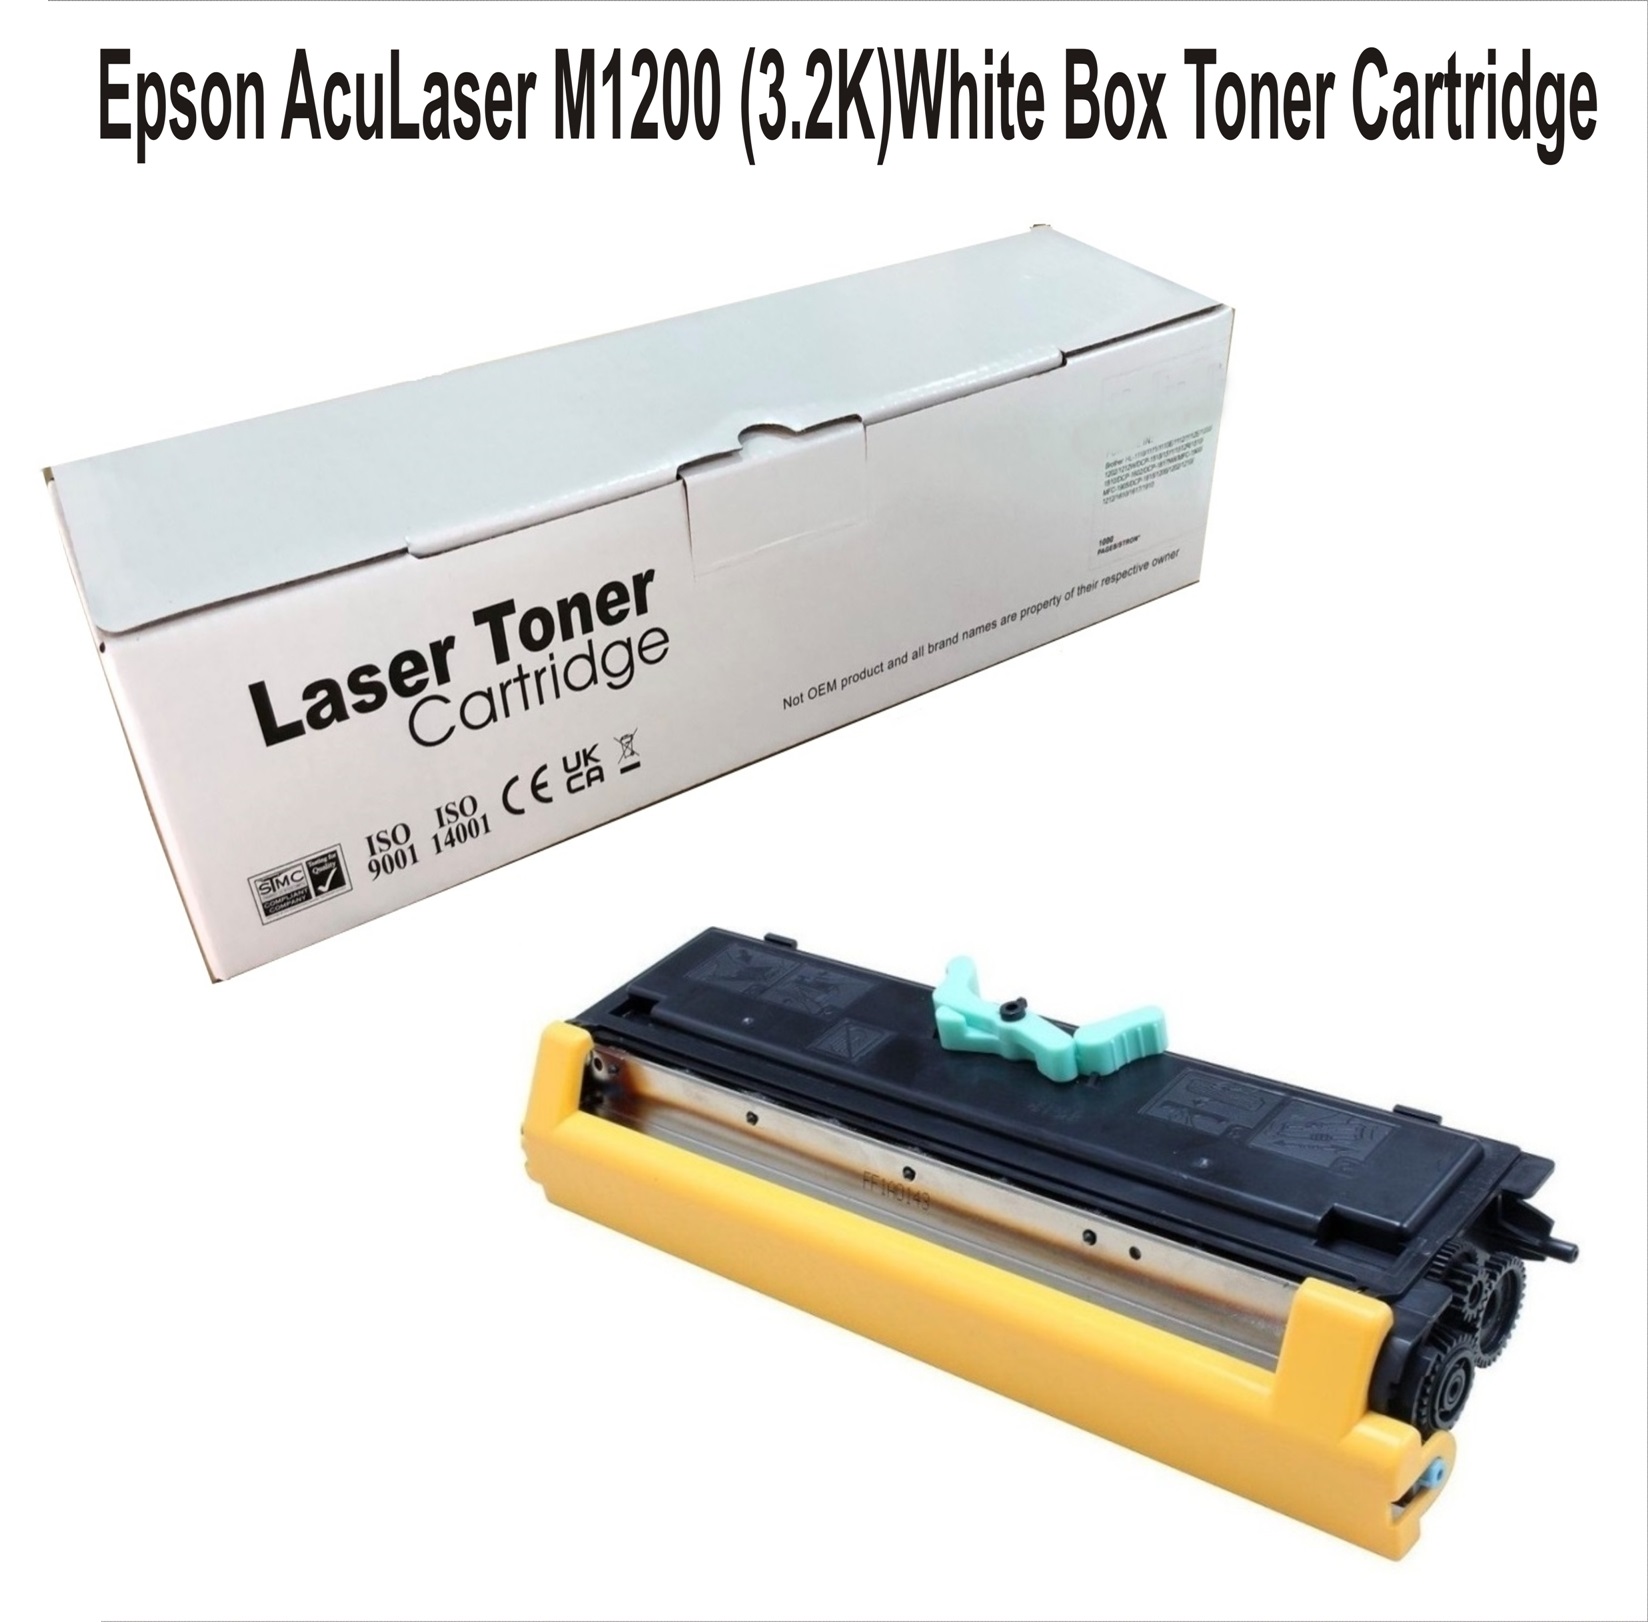 EPSON M1200 (3.2K) White Box